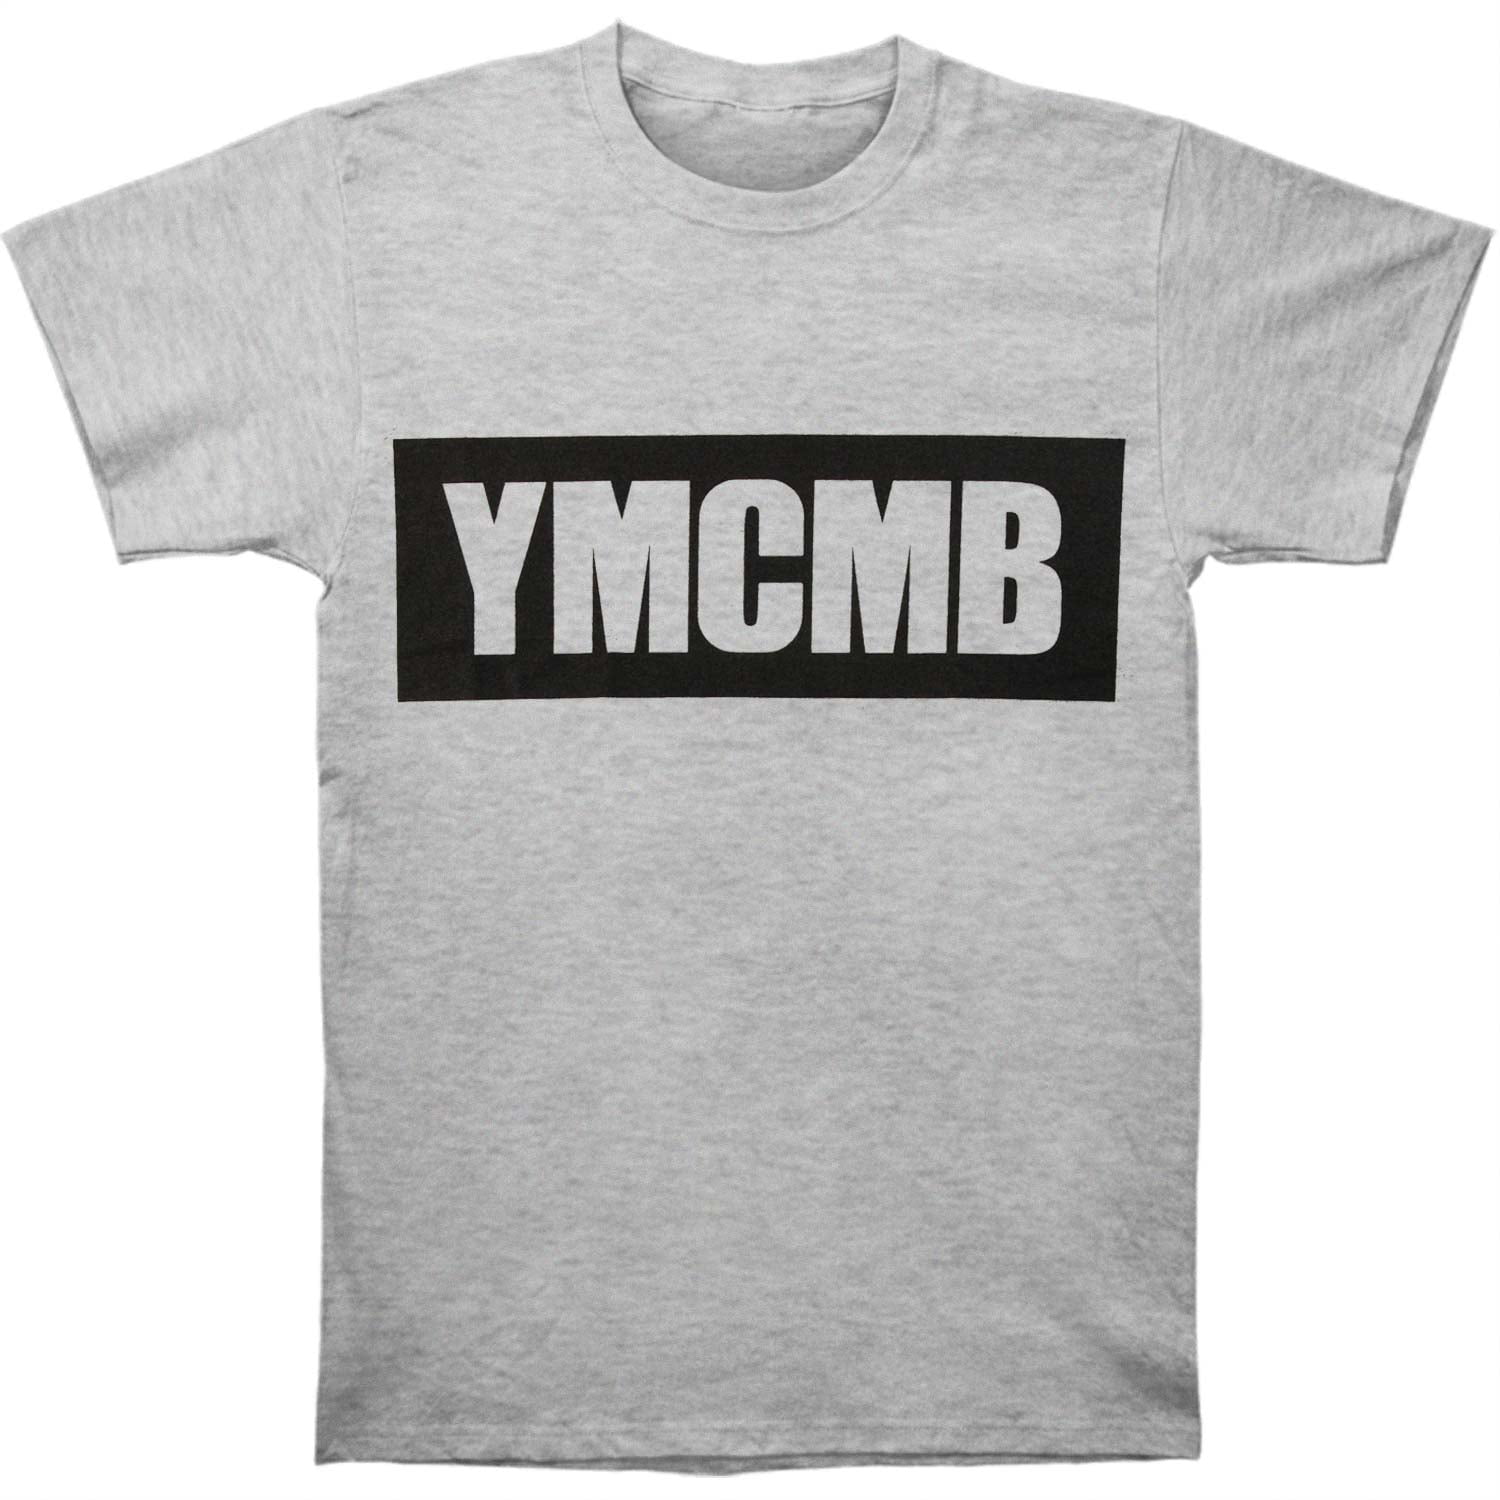 Ymcmb - YMCMB Men's YMCMB Logo Tee Heather T-shirt Heather - Walmart ...